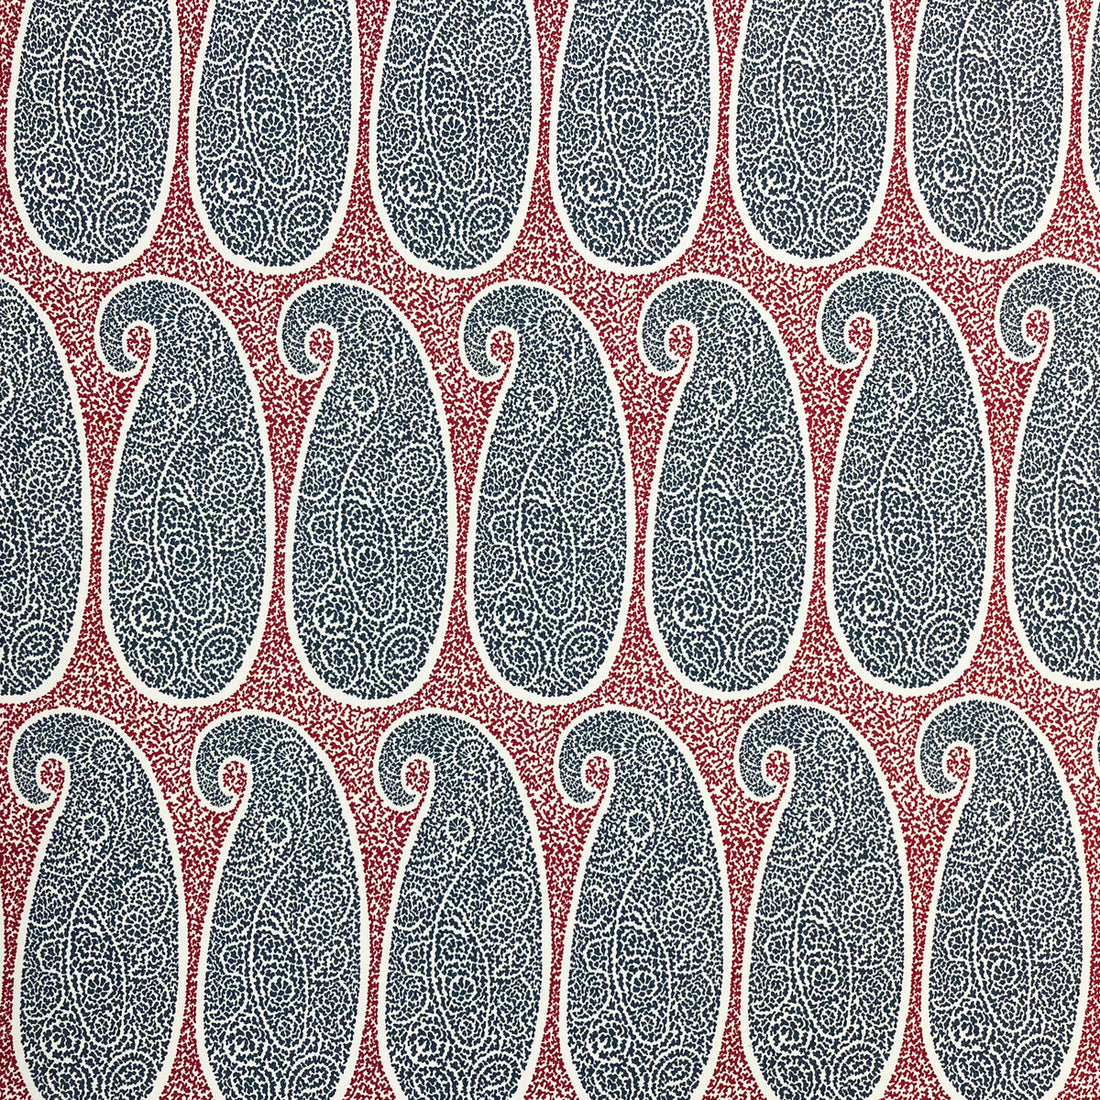 Yaiza fabric in rojo/azul color - pattern LCT1023.007.0 - by Gaston y Daniela in the Lorenzo Castillo V collection